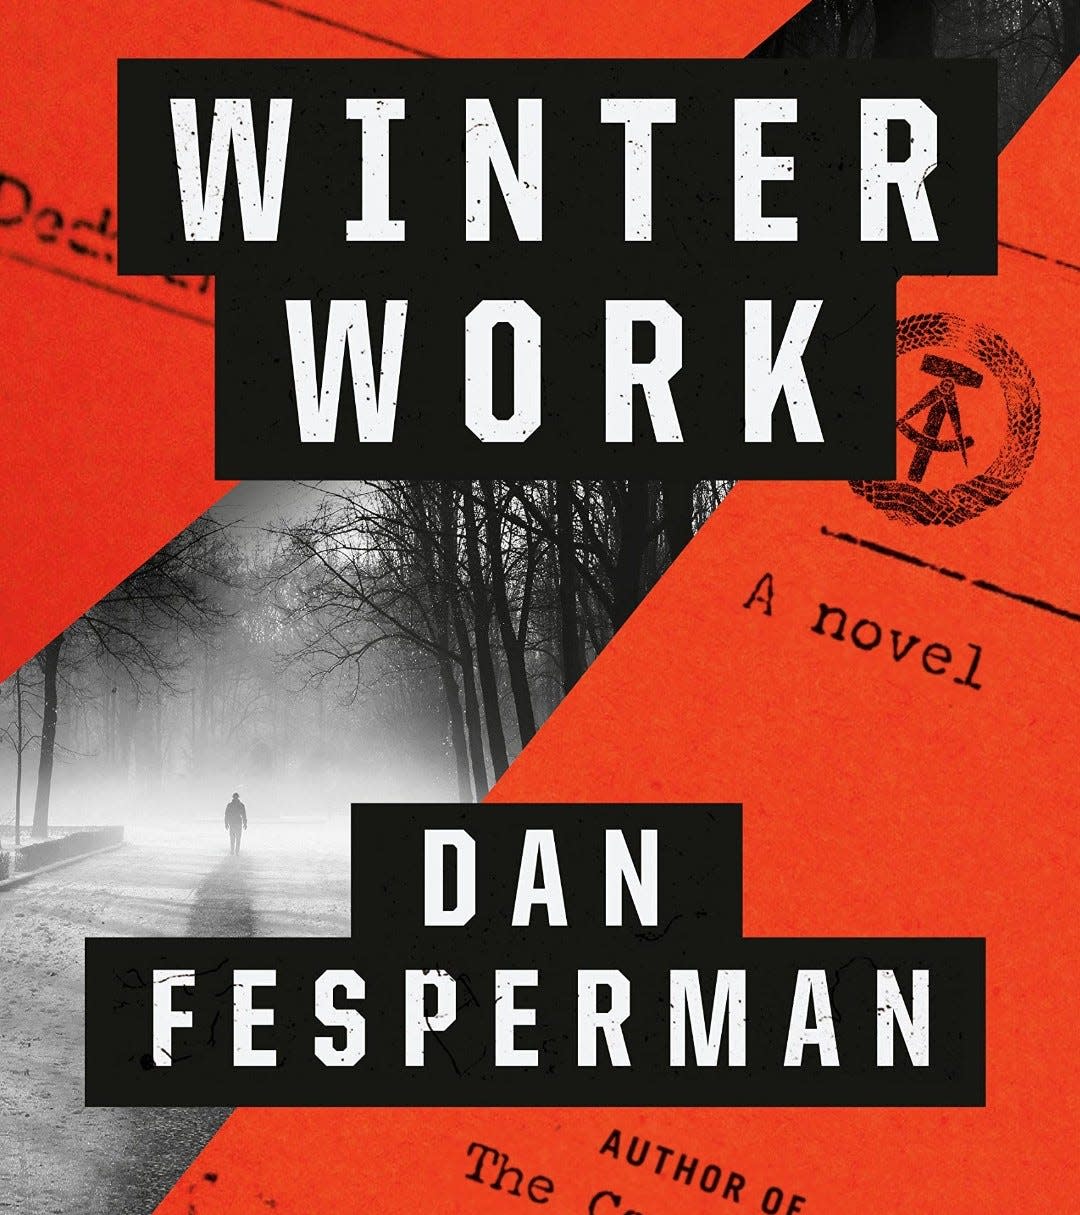 A new novel from Dan Fesperman